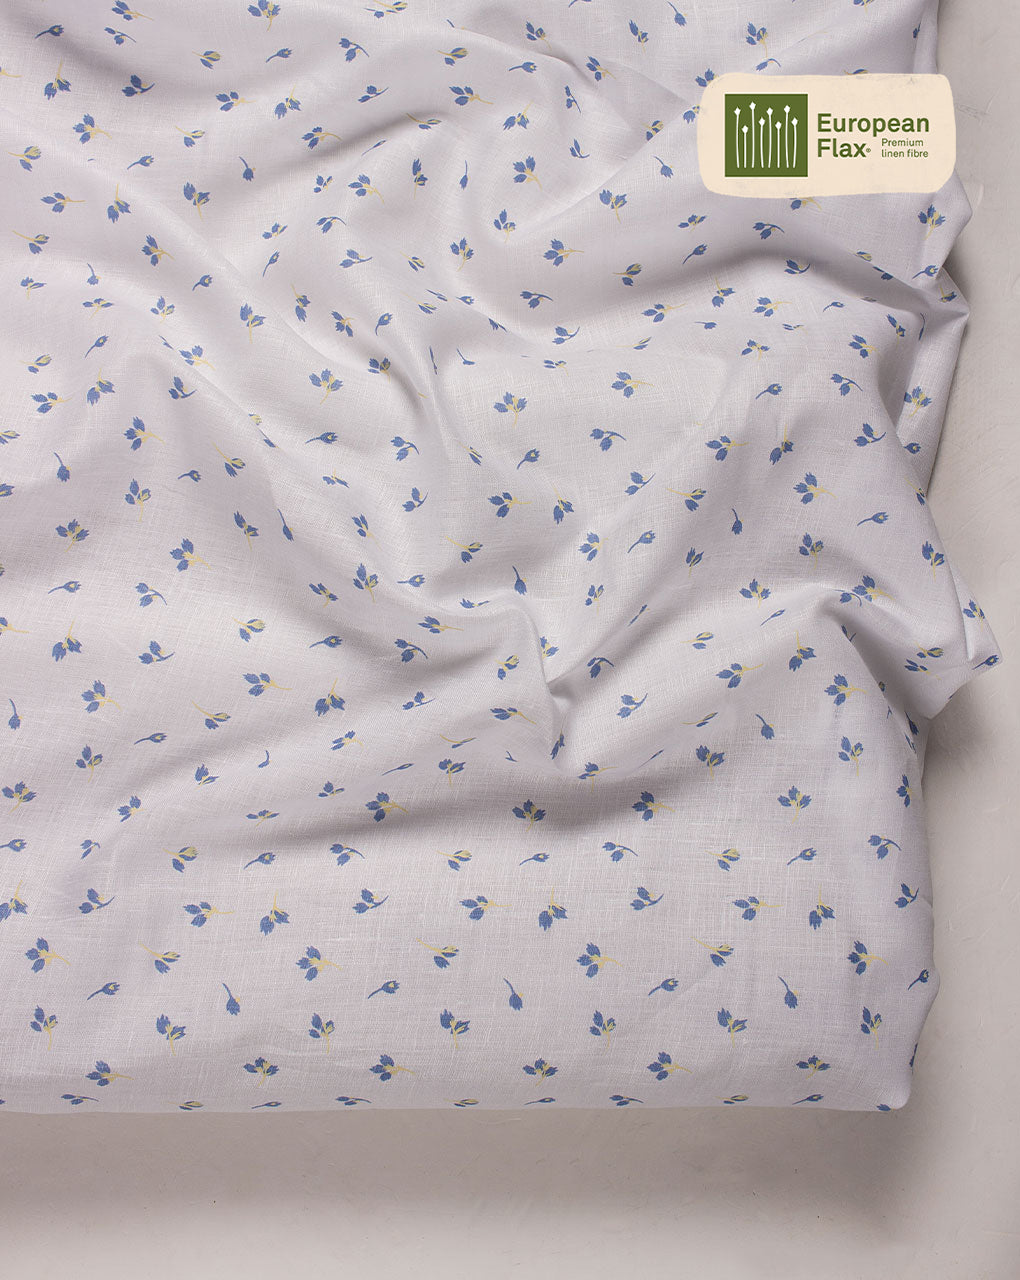 Printed Linen European Flax Certified Fabric